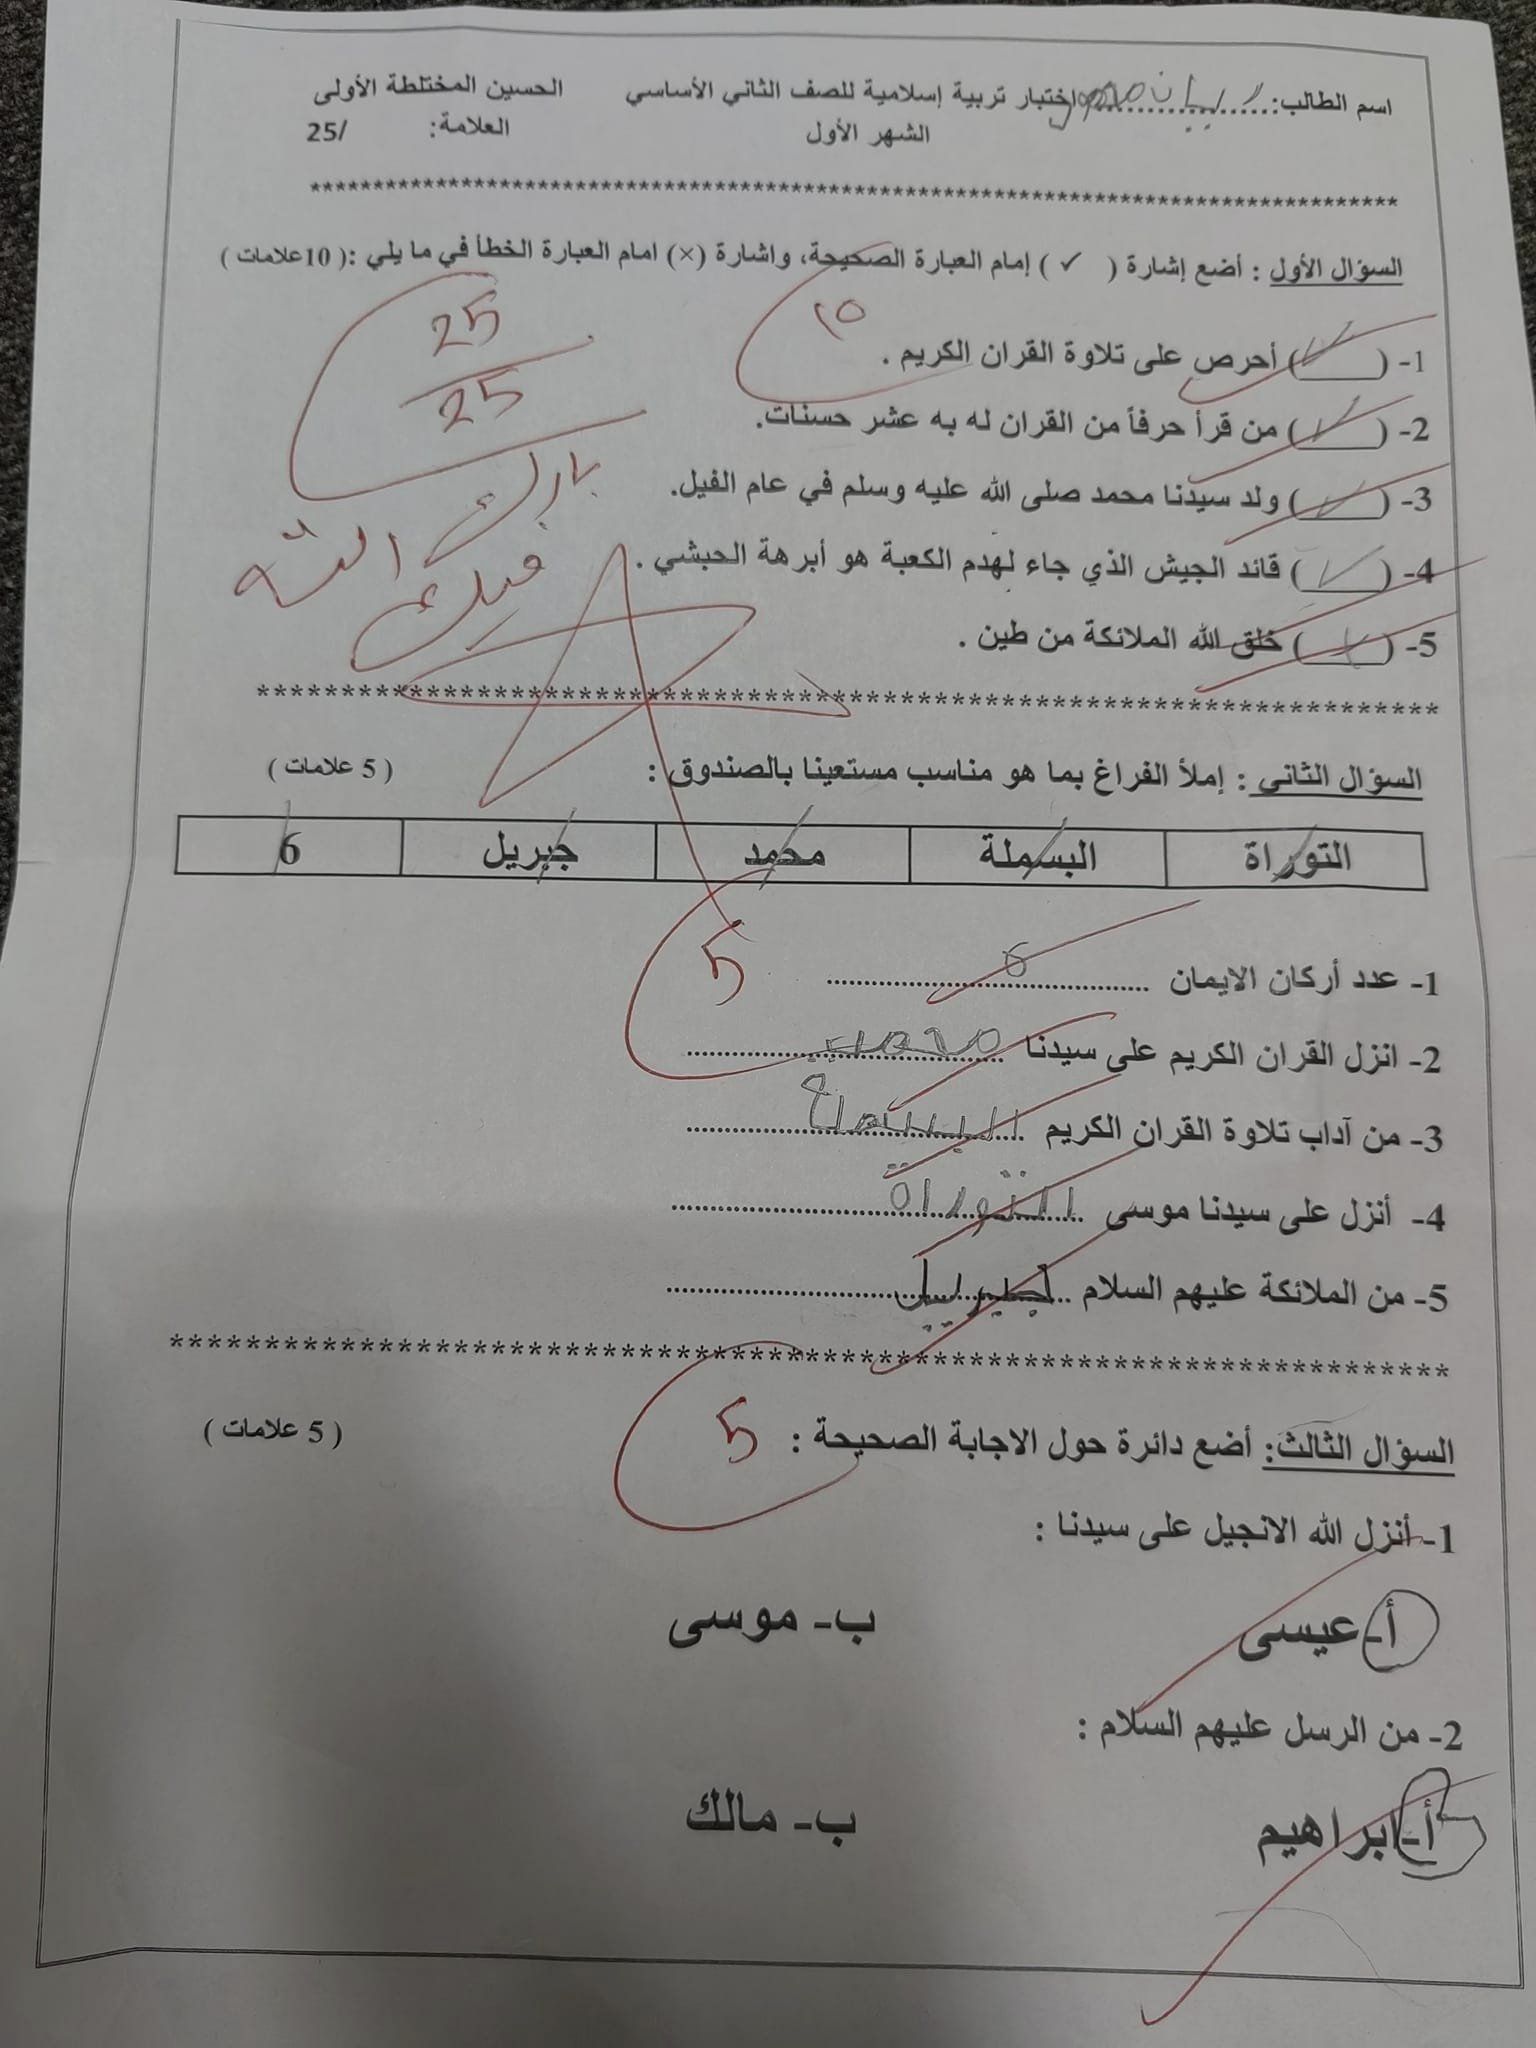 NDMwODcwMC4wODk5 بالصور امتحان الشهر الاول لمادة التربية الاسلامية للصف الثاني الفصل الاول 2023